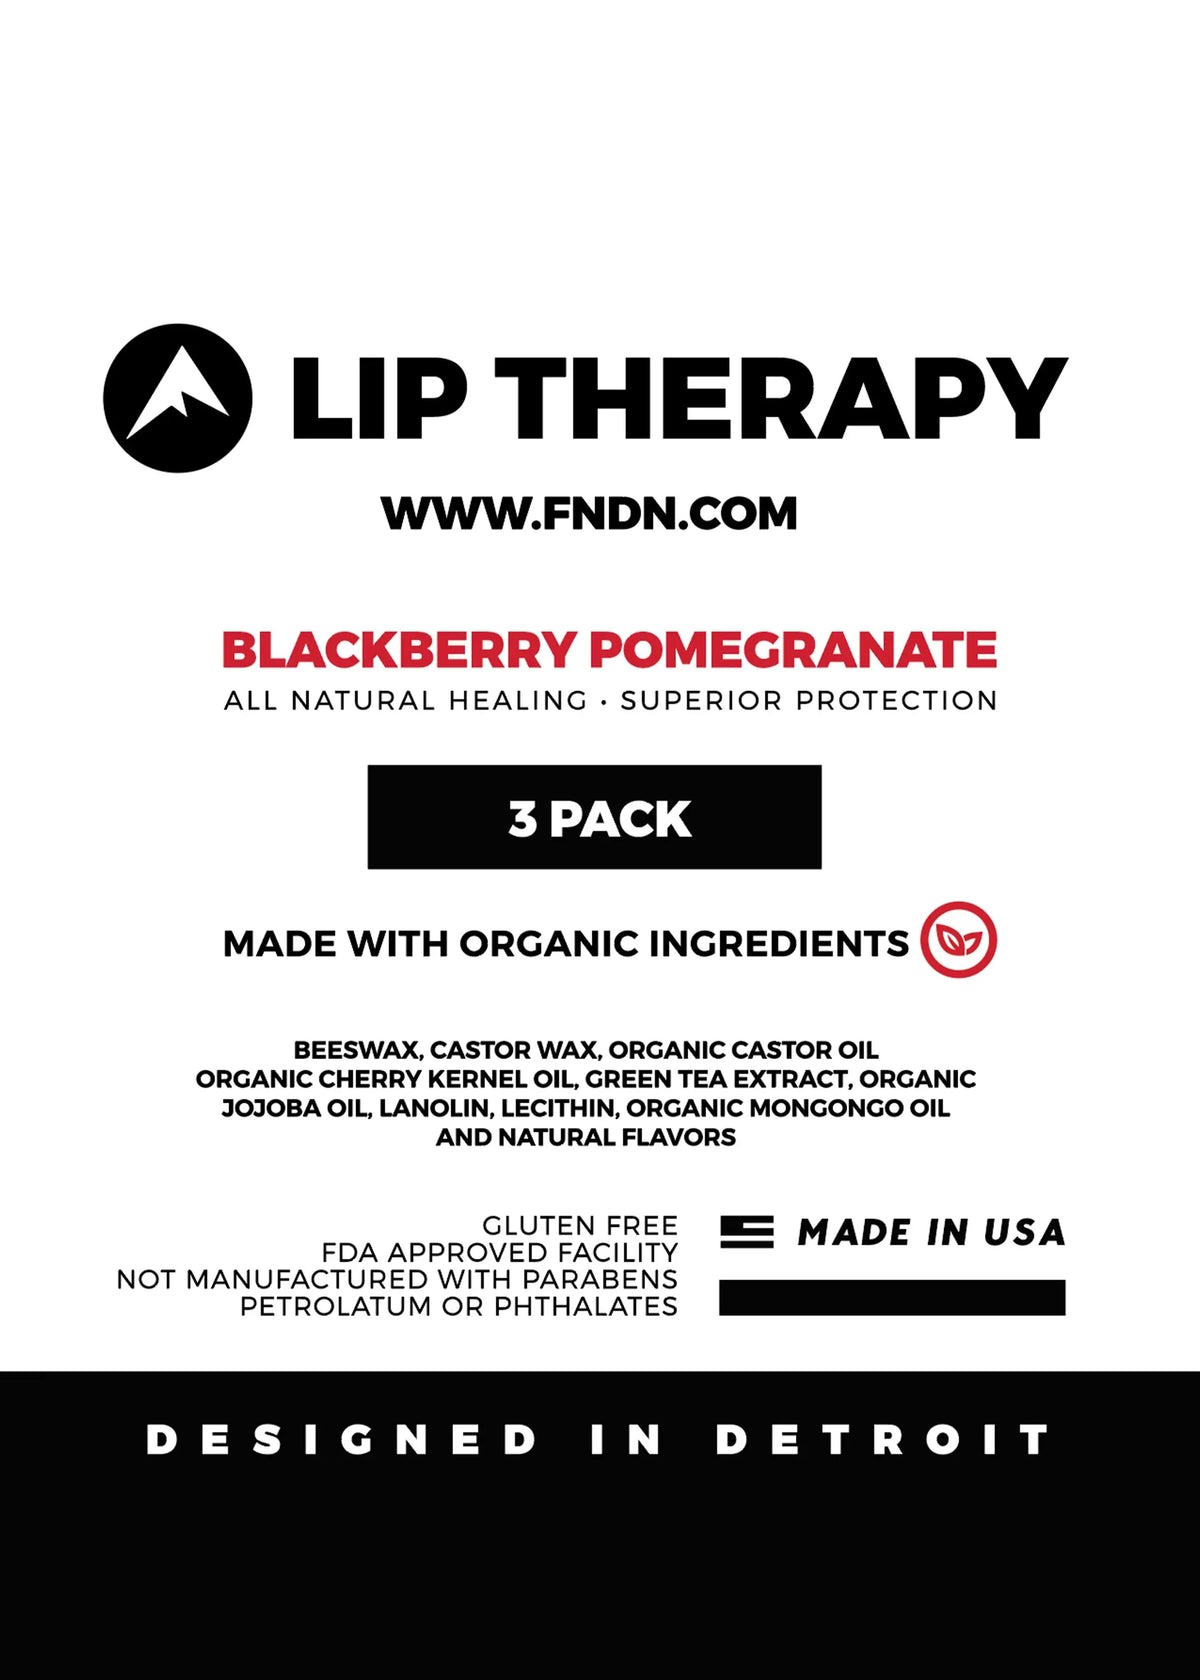 FNDN Lip Therapy - Blackberry Pomegranate / 3-Pack FNDN